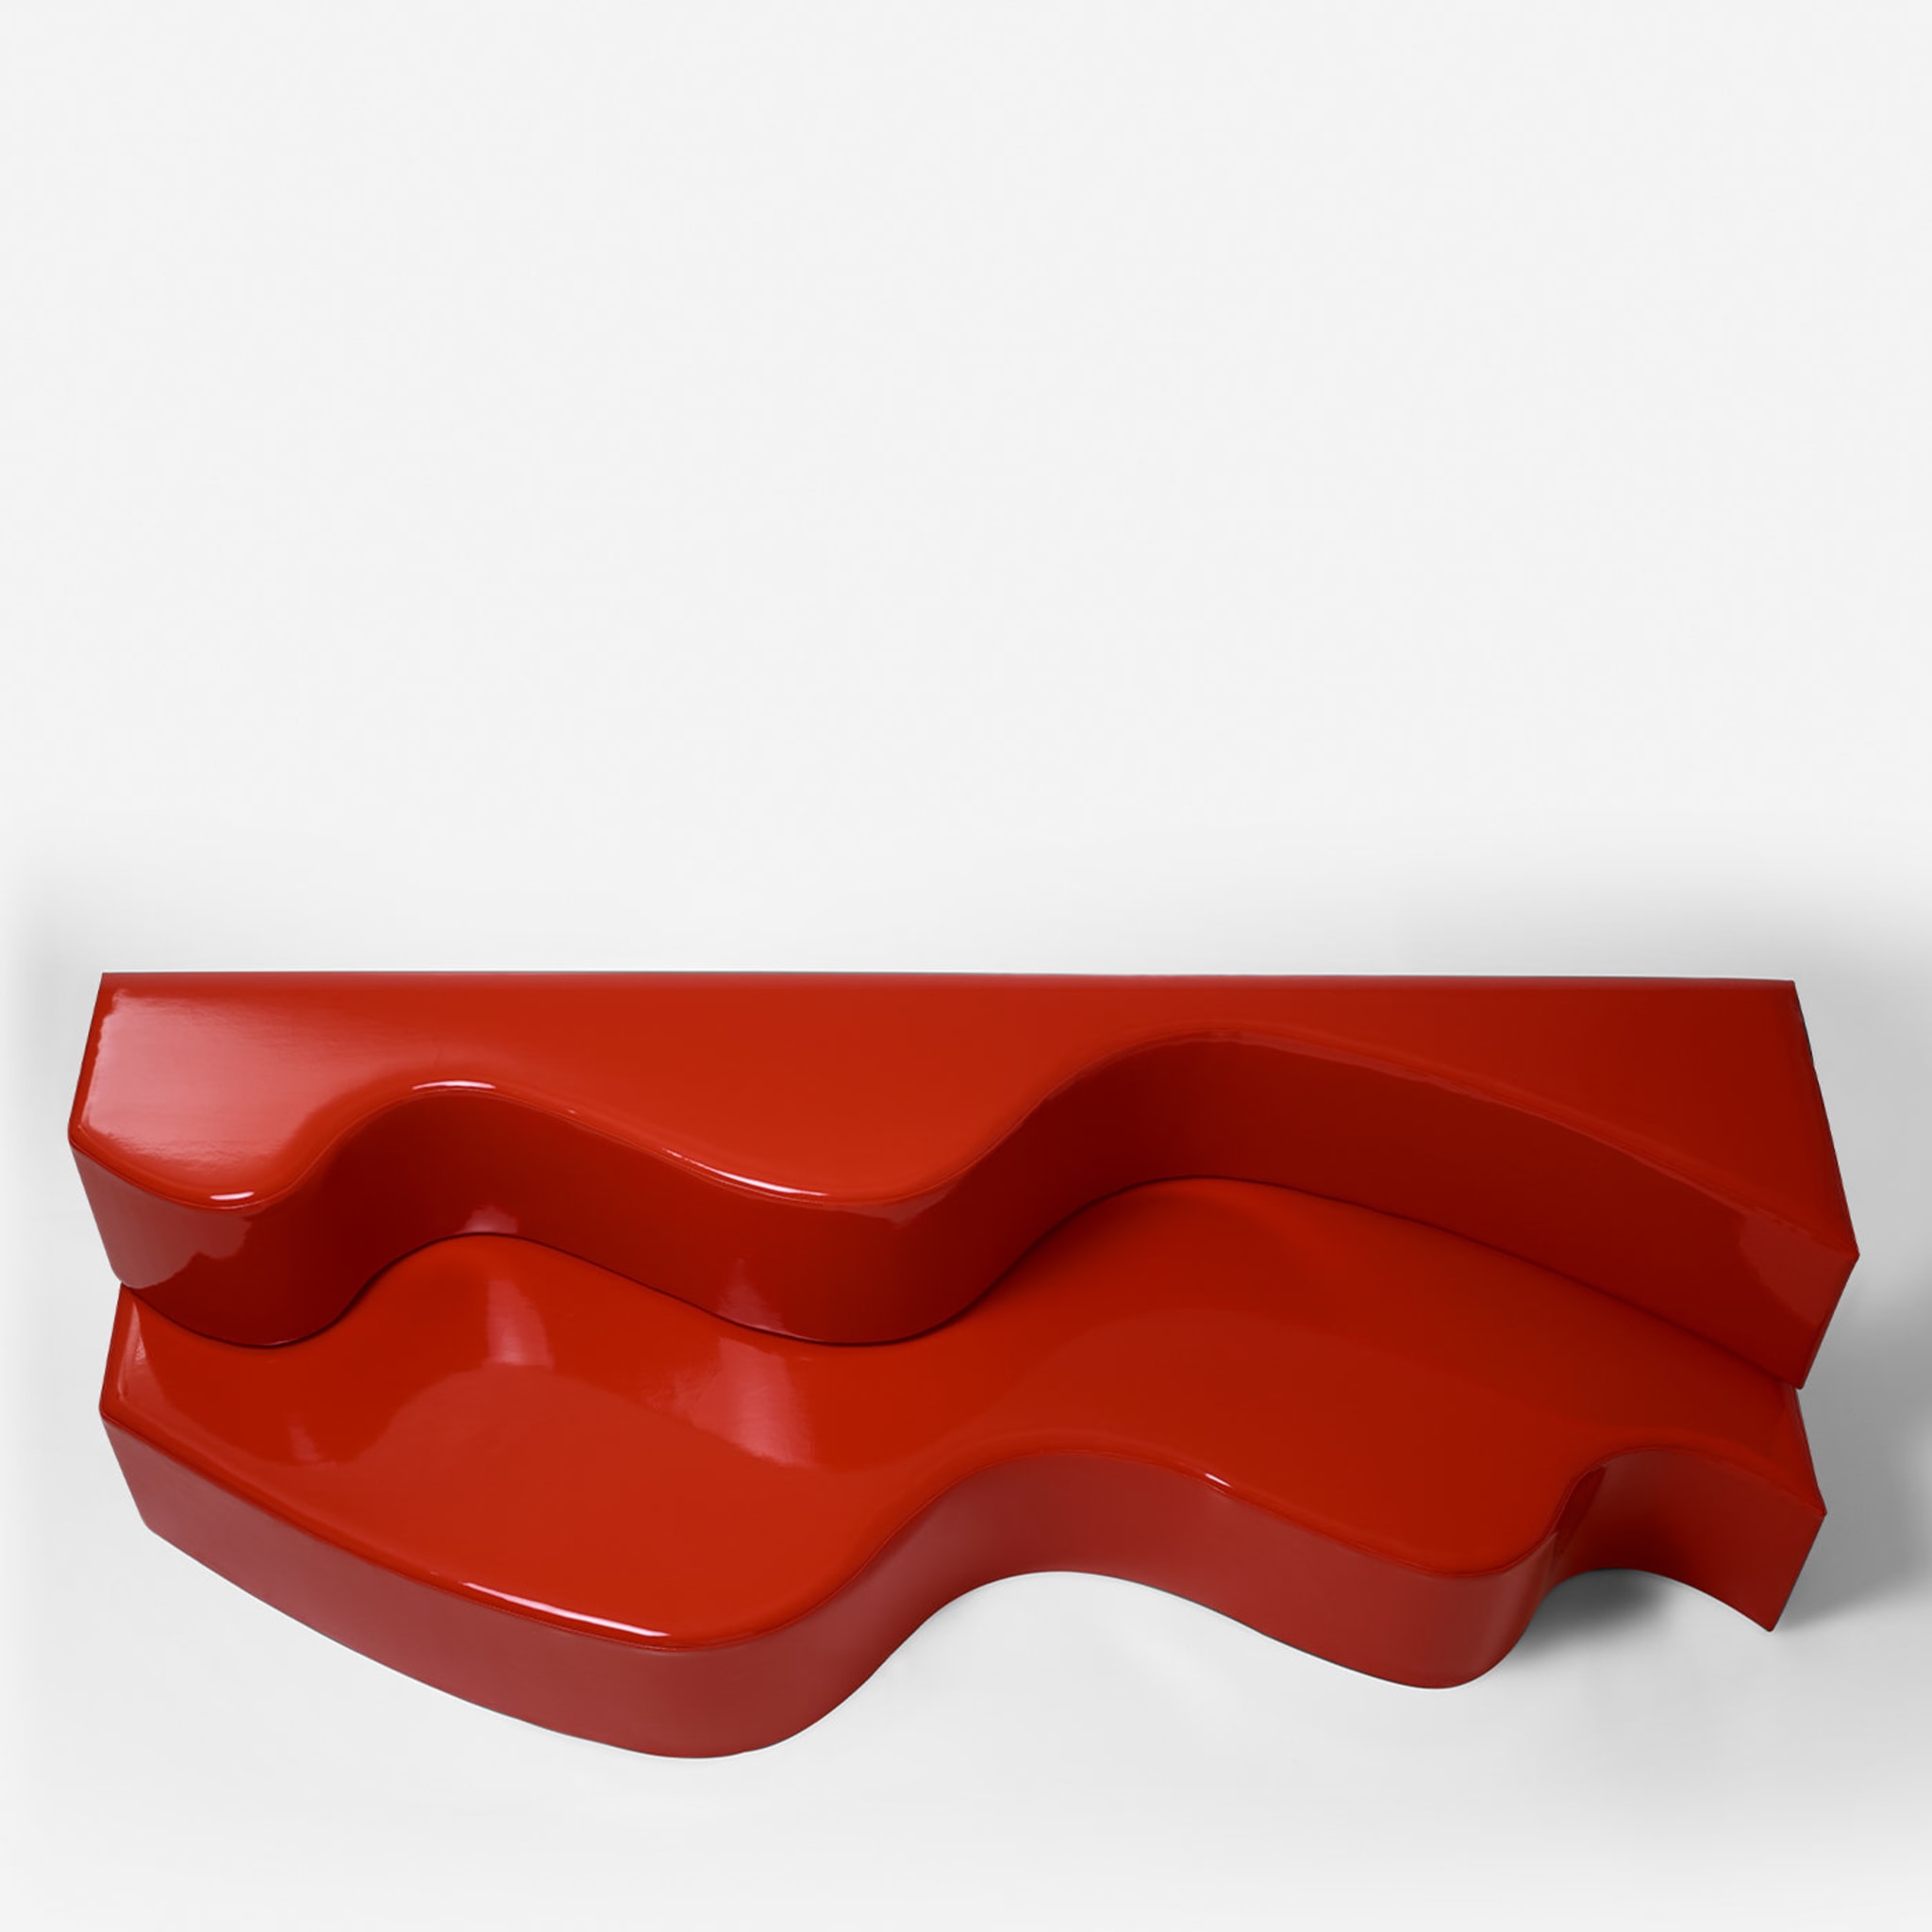 Superonda Red Sofa by Archizoom - Alternative view 1